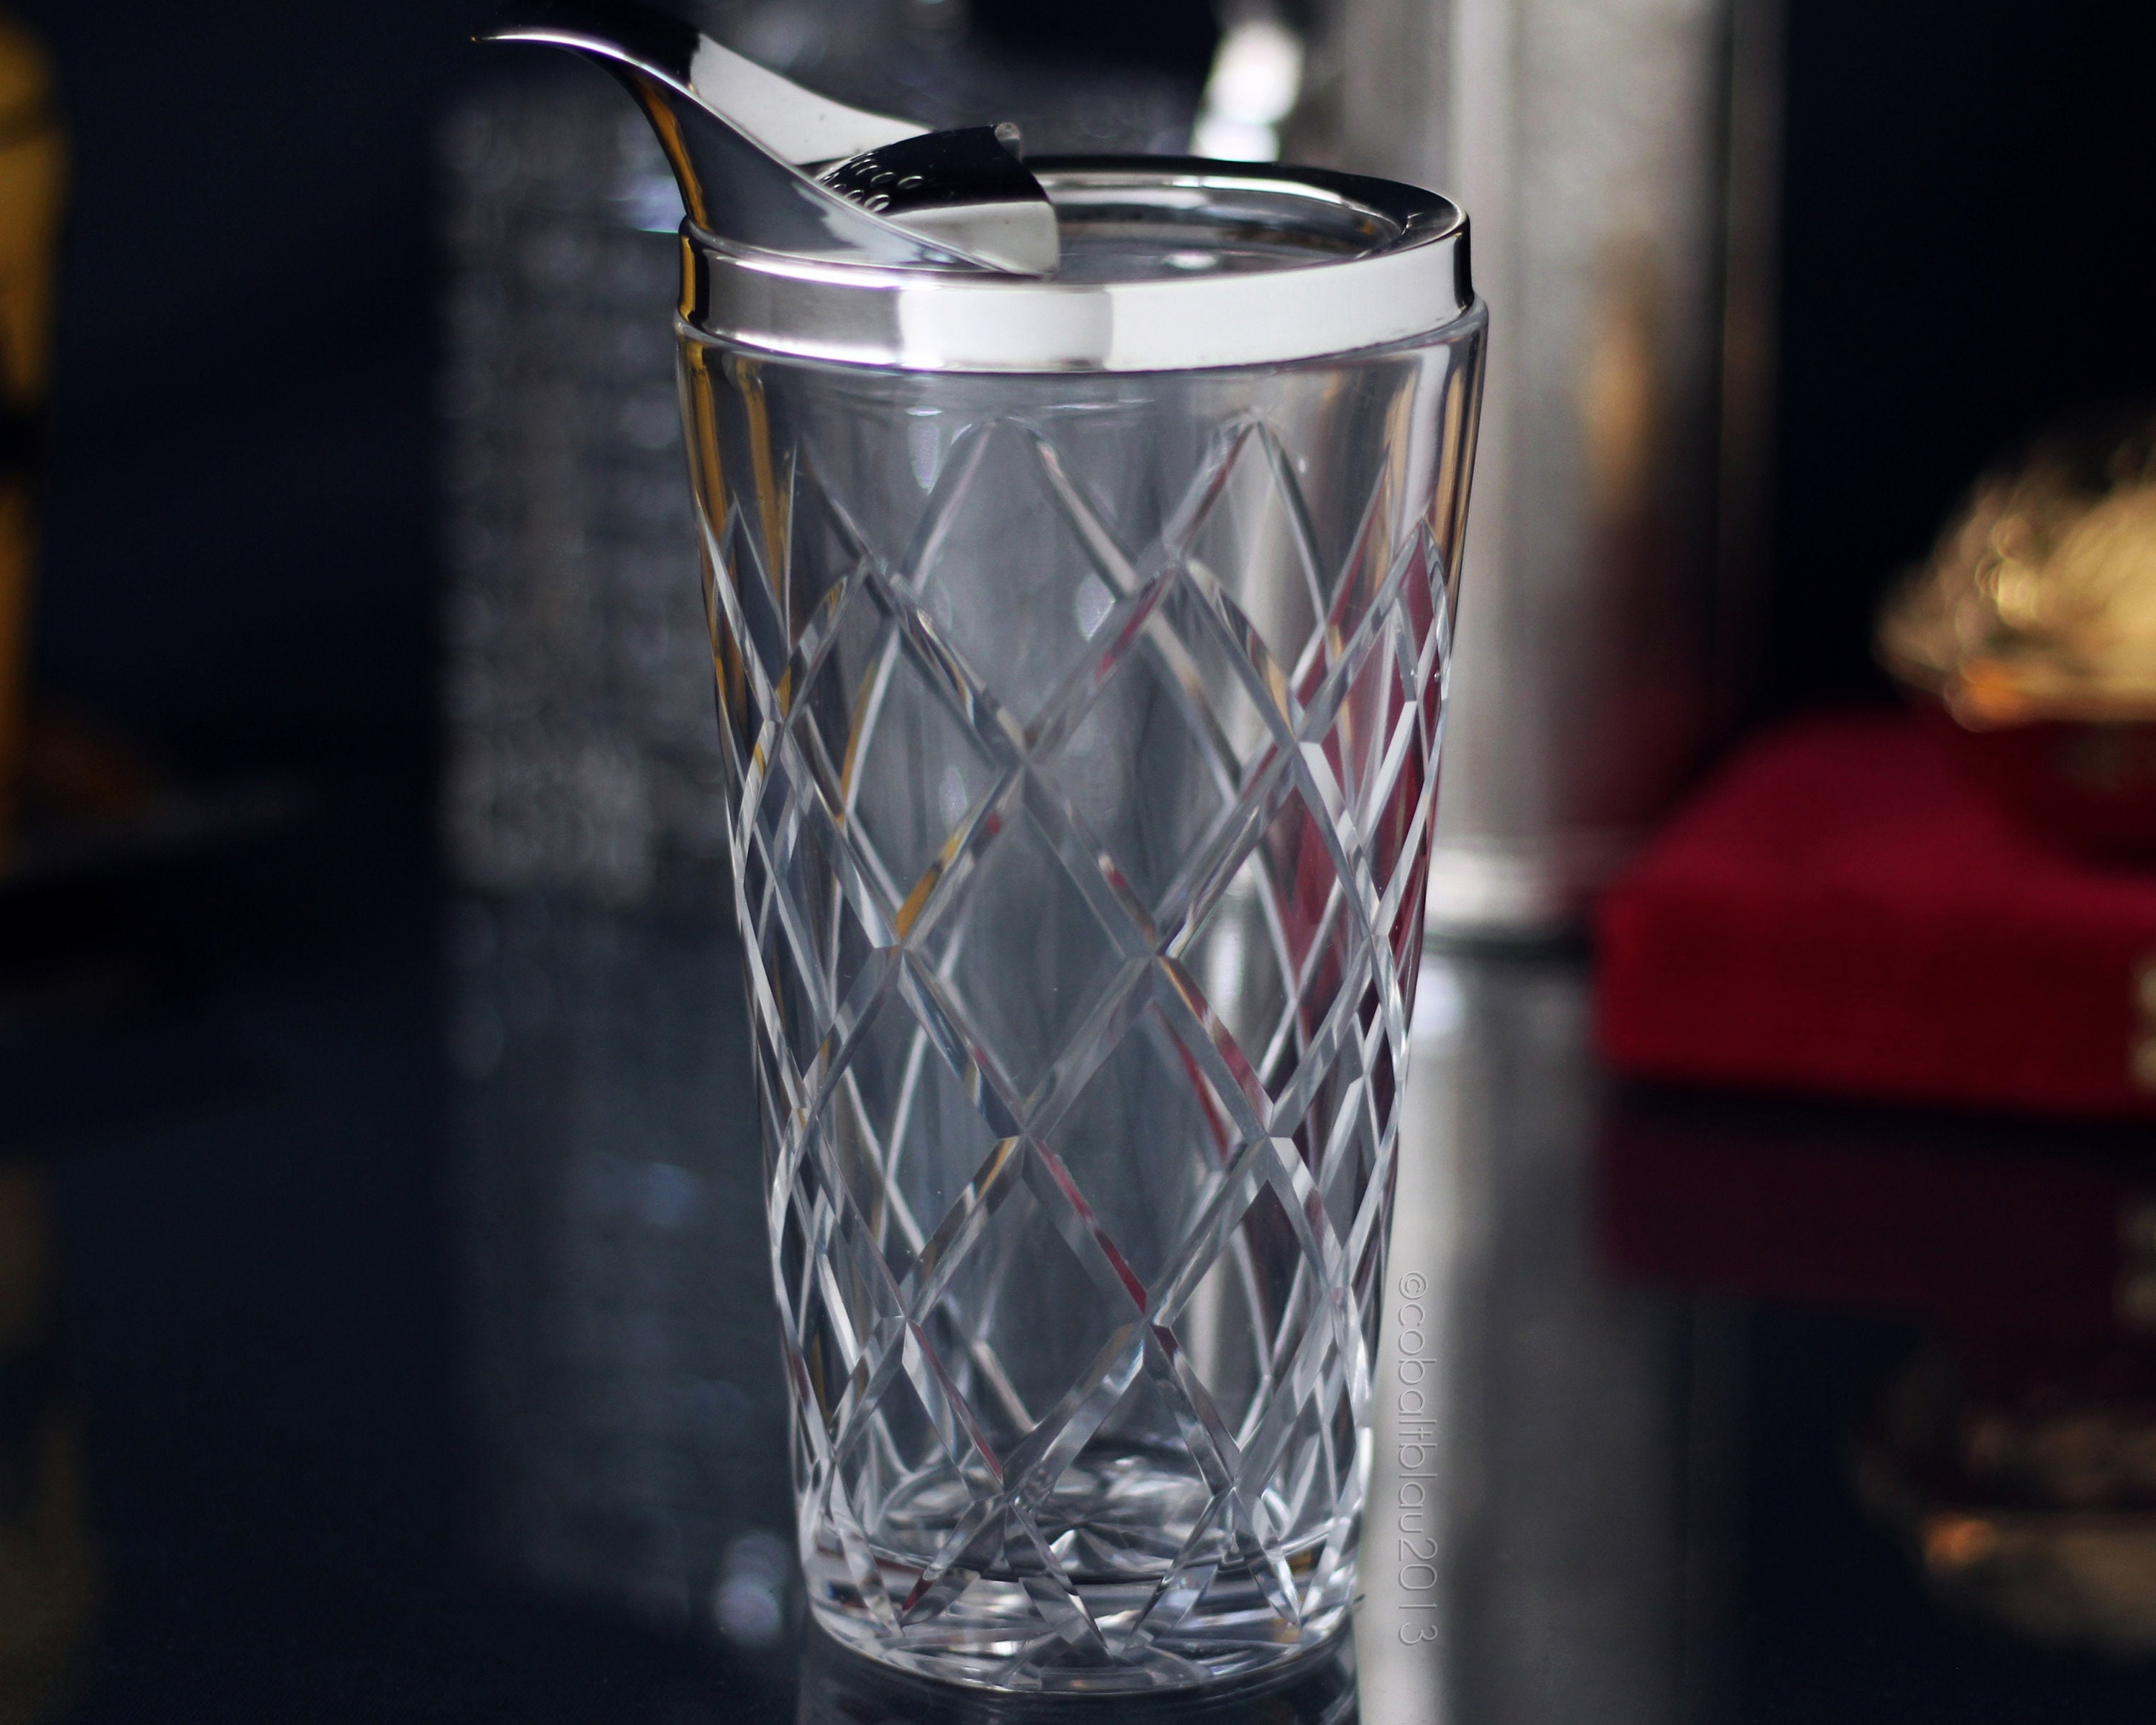 Godinger Beverage Pitcher Carafe, Cocktail Pitcher, Water Pitcher, Bar  Mixing Pitcher Glass - Dublin Collection, 34oz